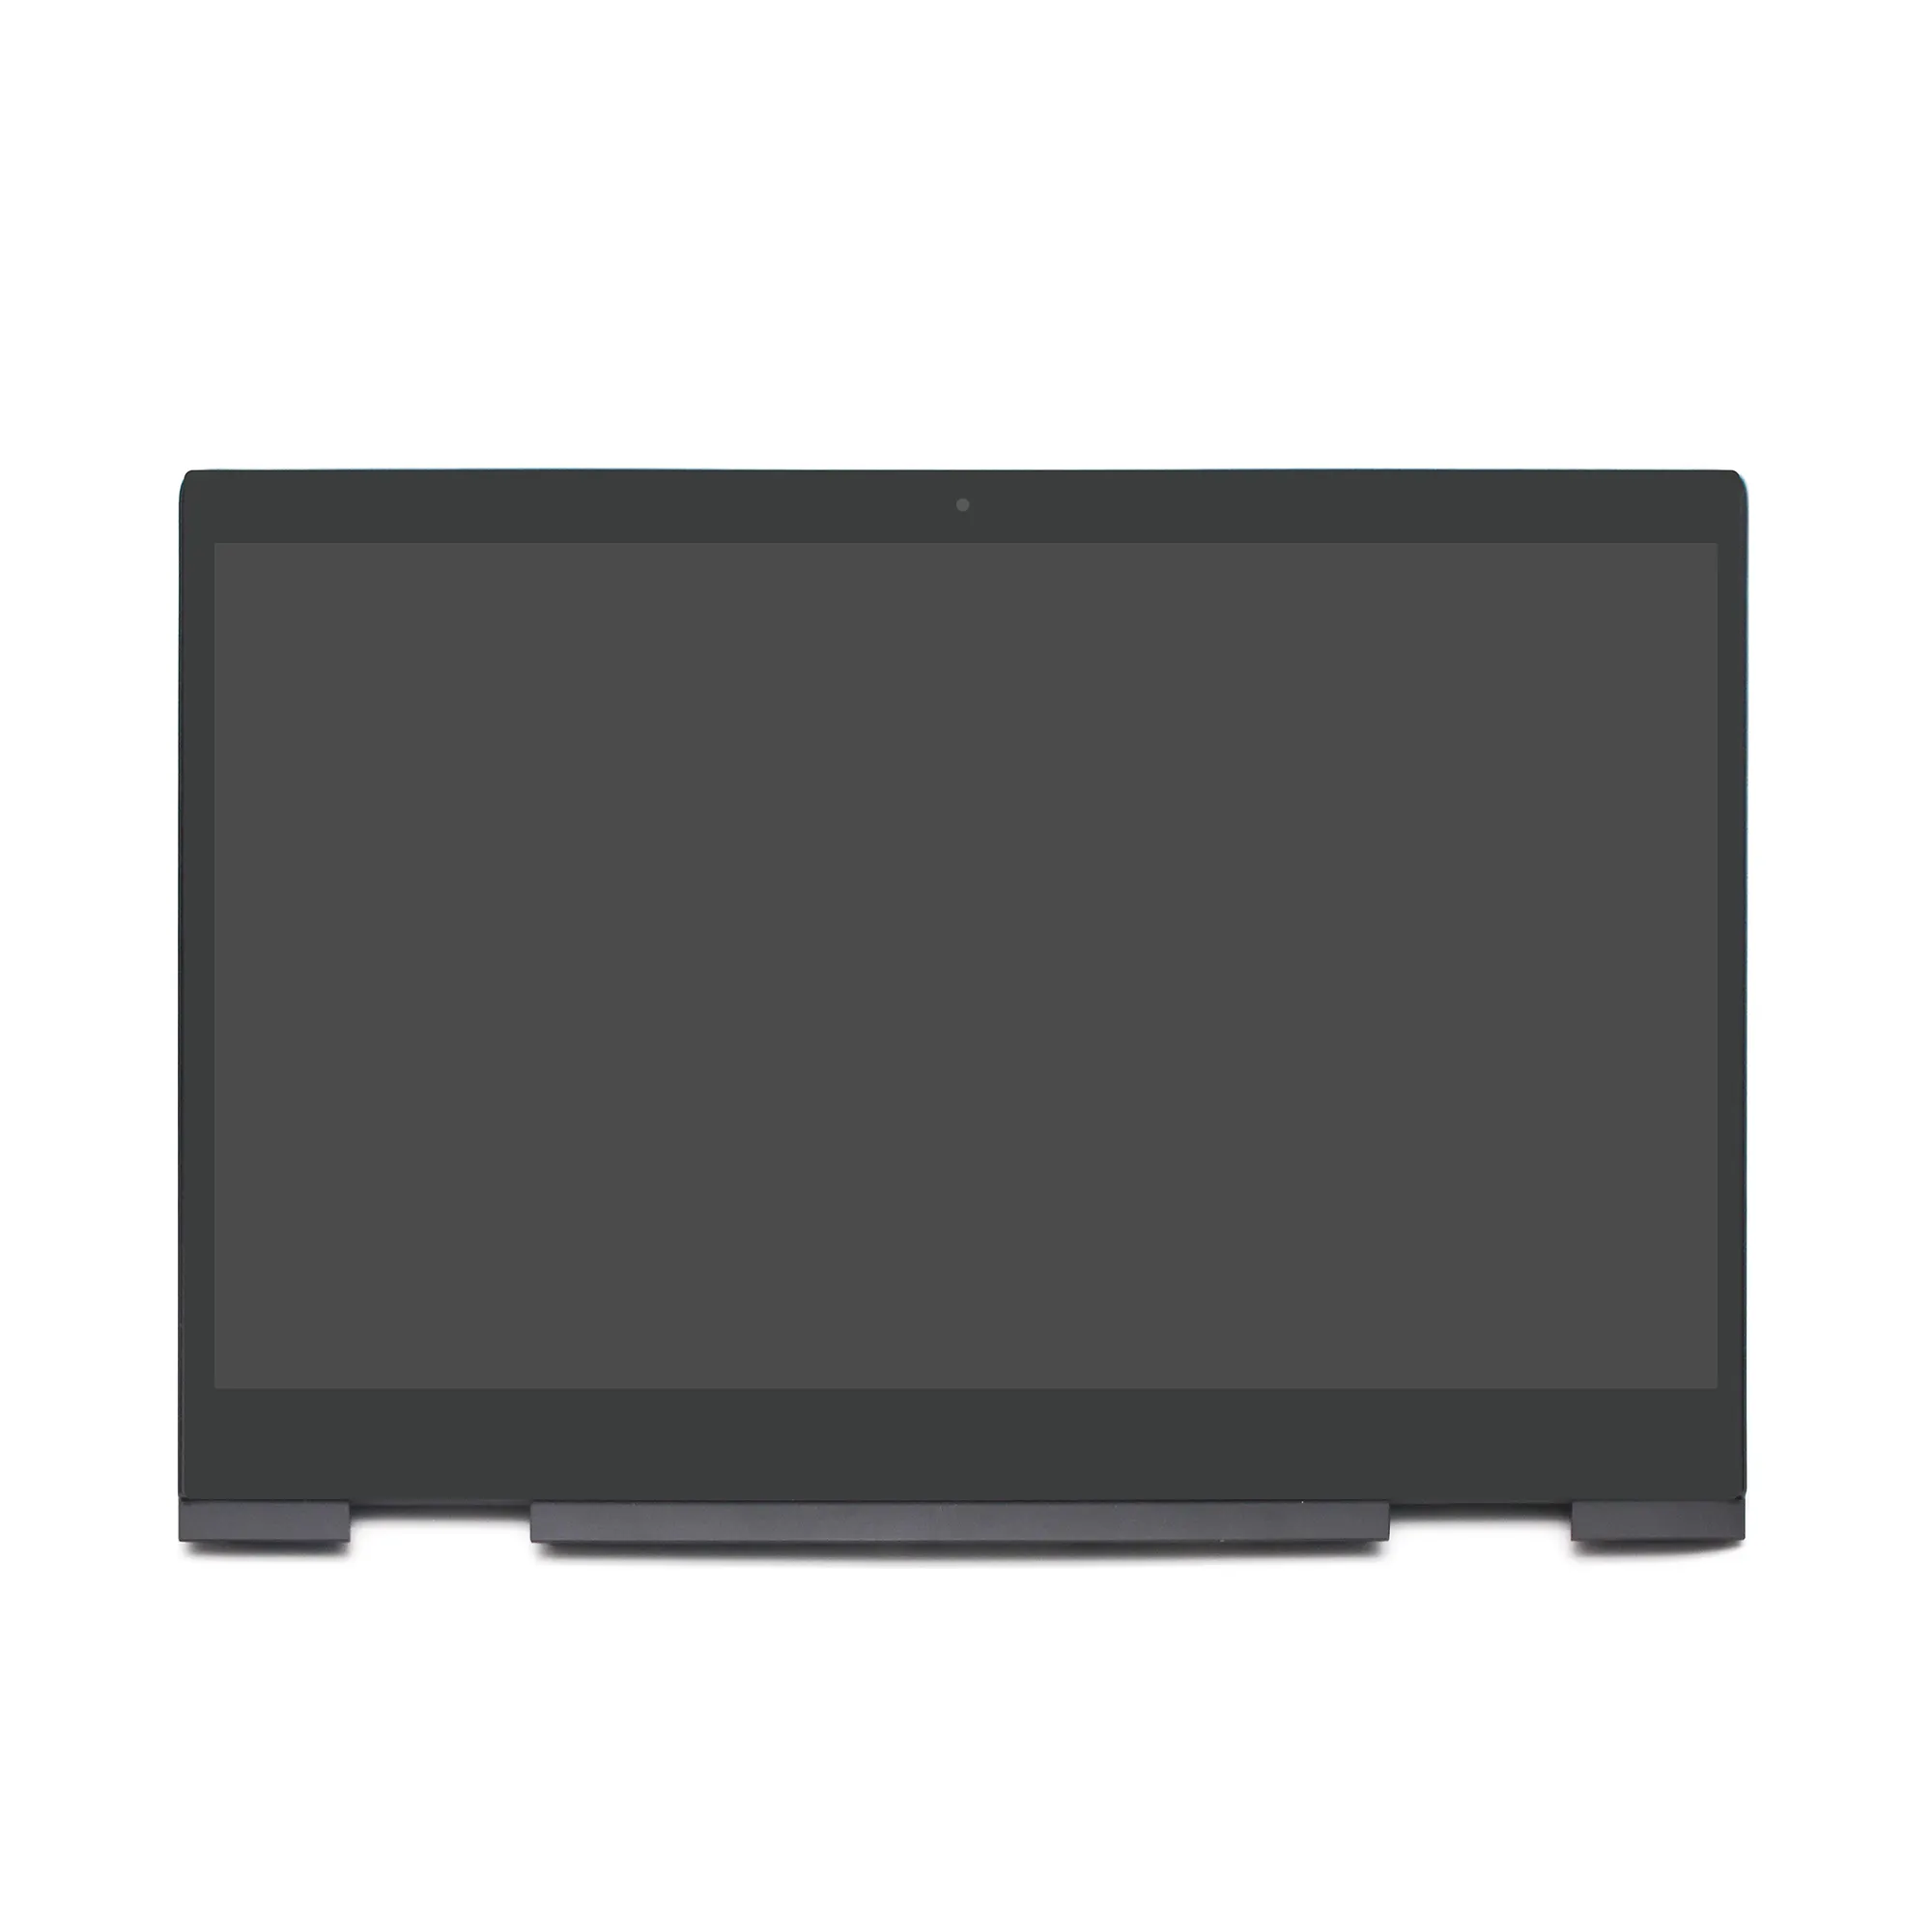 ЖК-дисплей и дигитайзер в сборе для ноутбука HP ENVY x360 15M-BQ 15M-BQ121DX, 15,6 дюйма